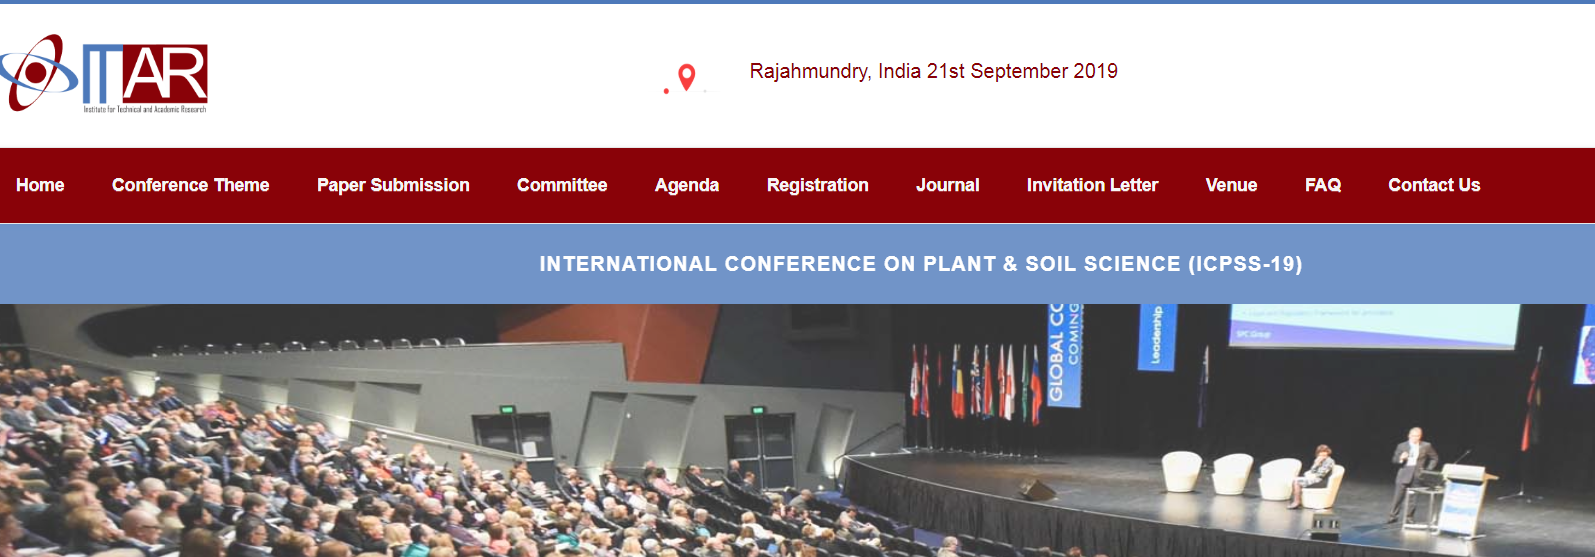 International Conference on Plant & Social Science (ICPSS-19), Rajahmundry, Andhra Pradesh, India